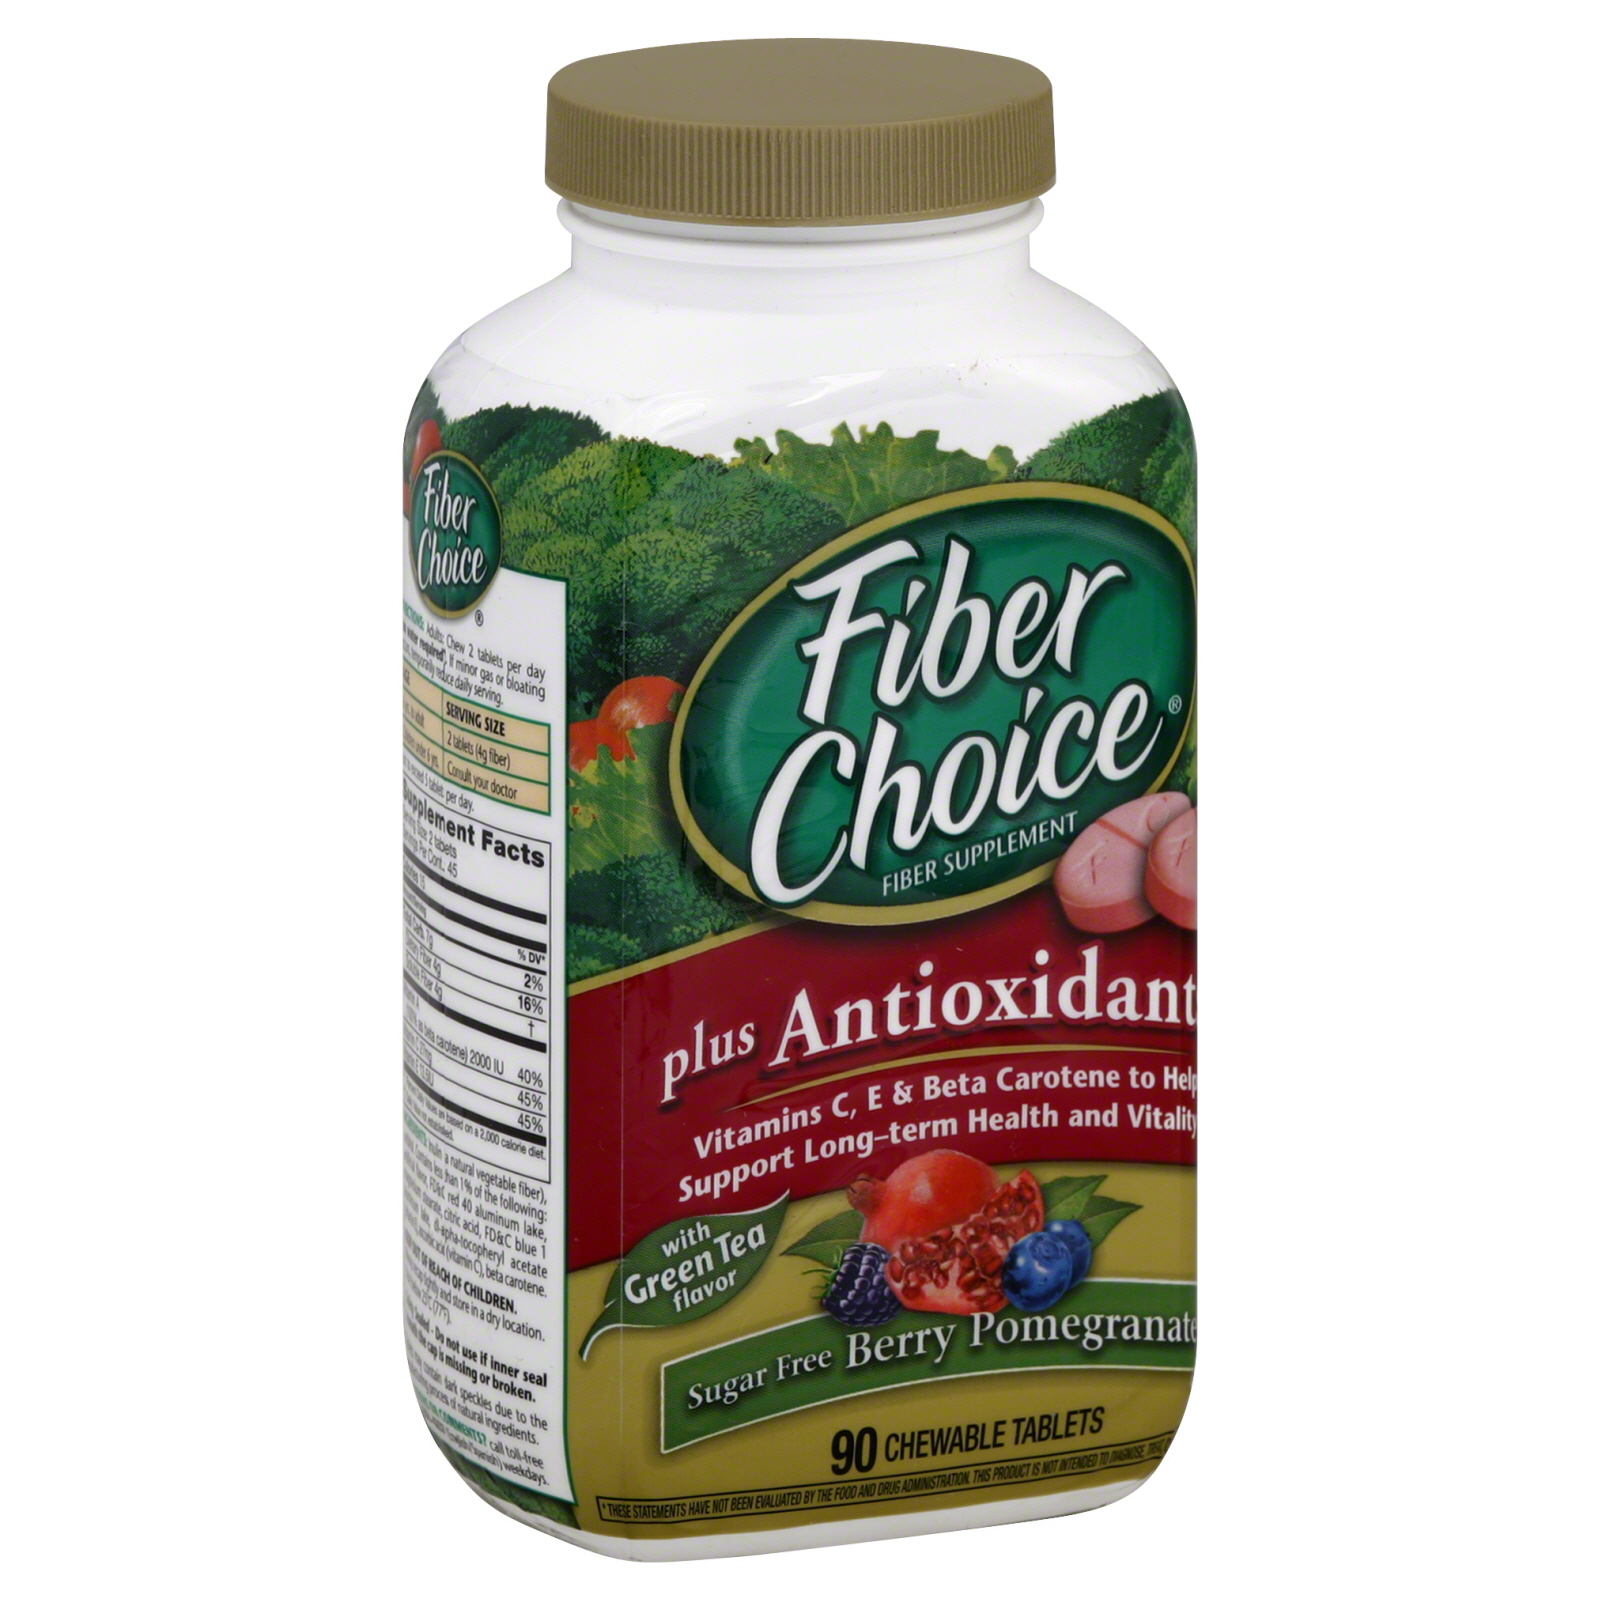 Fiber Choice Fiber Supplement, Plus Antioxidants, Sugar Free Berry Pomegranate, Chewable Tablets, 90 chewable tablets